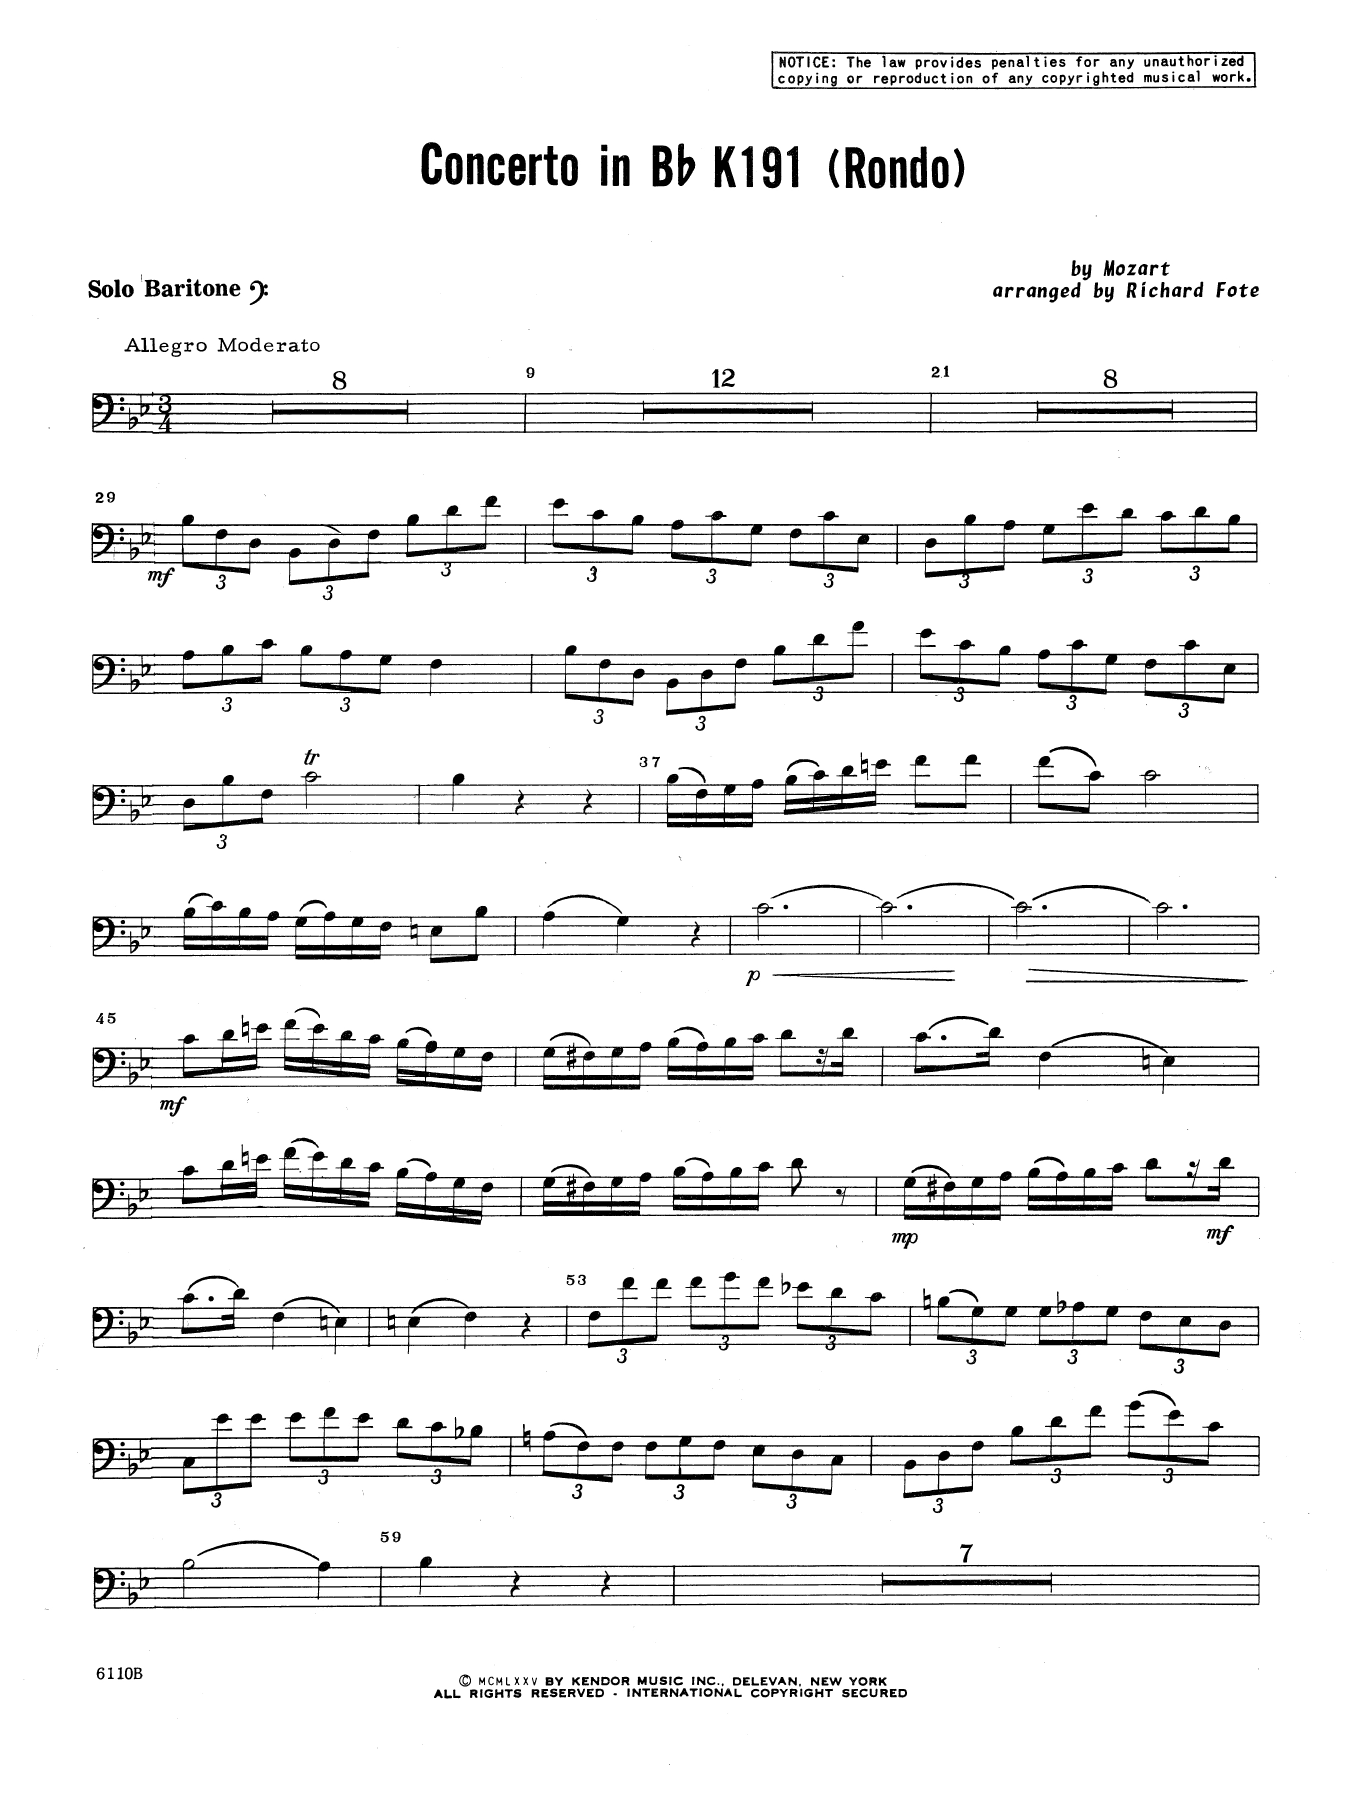 Download Richard Fote Concerto In Bb K191 (Rondo) - Baritone Sheet Music